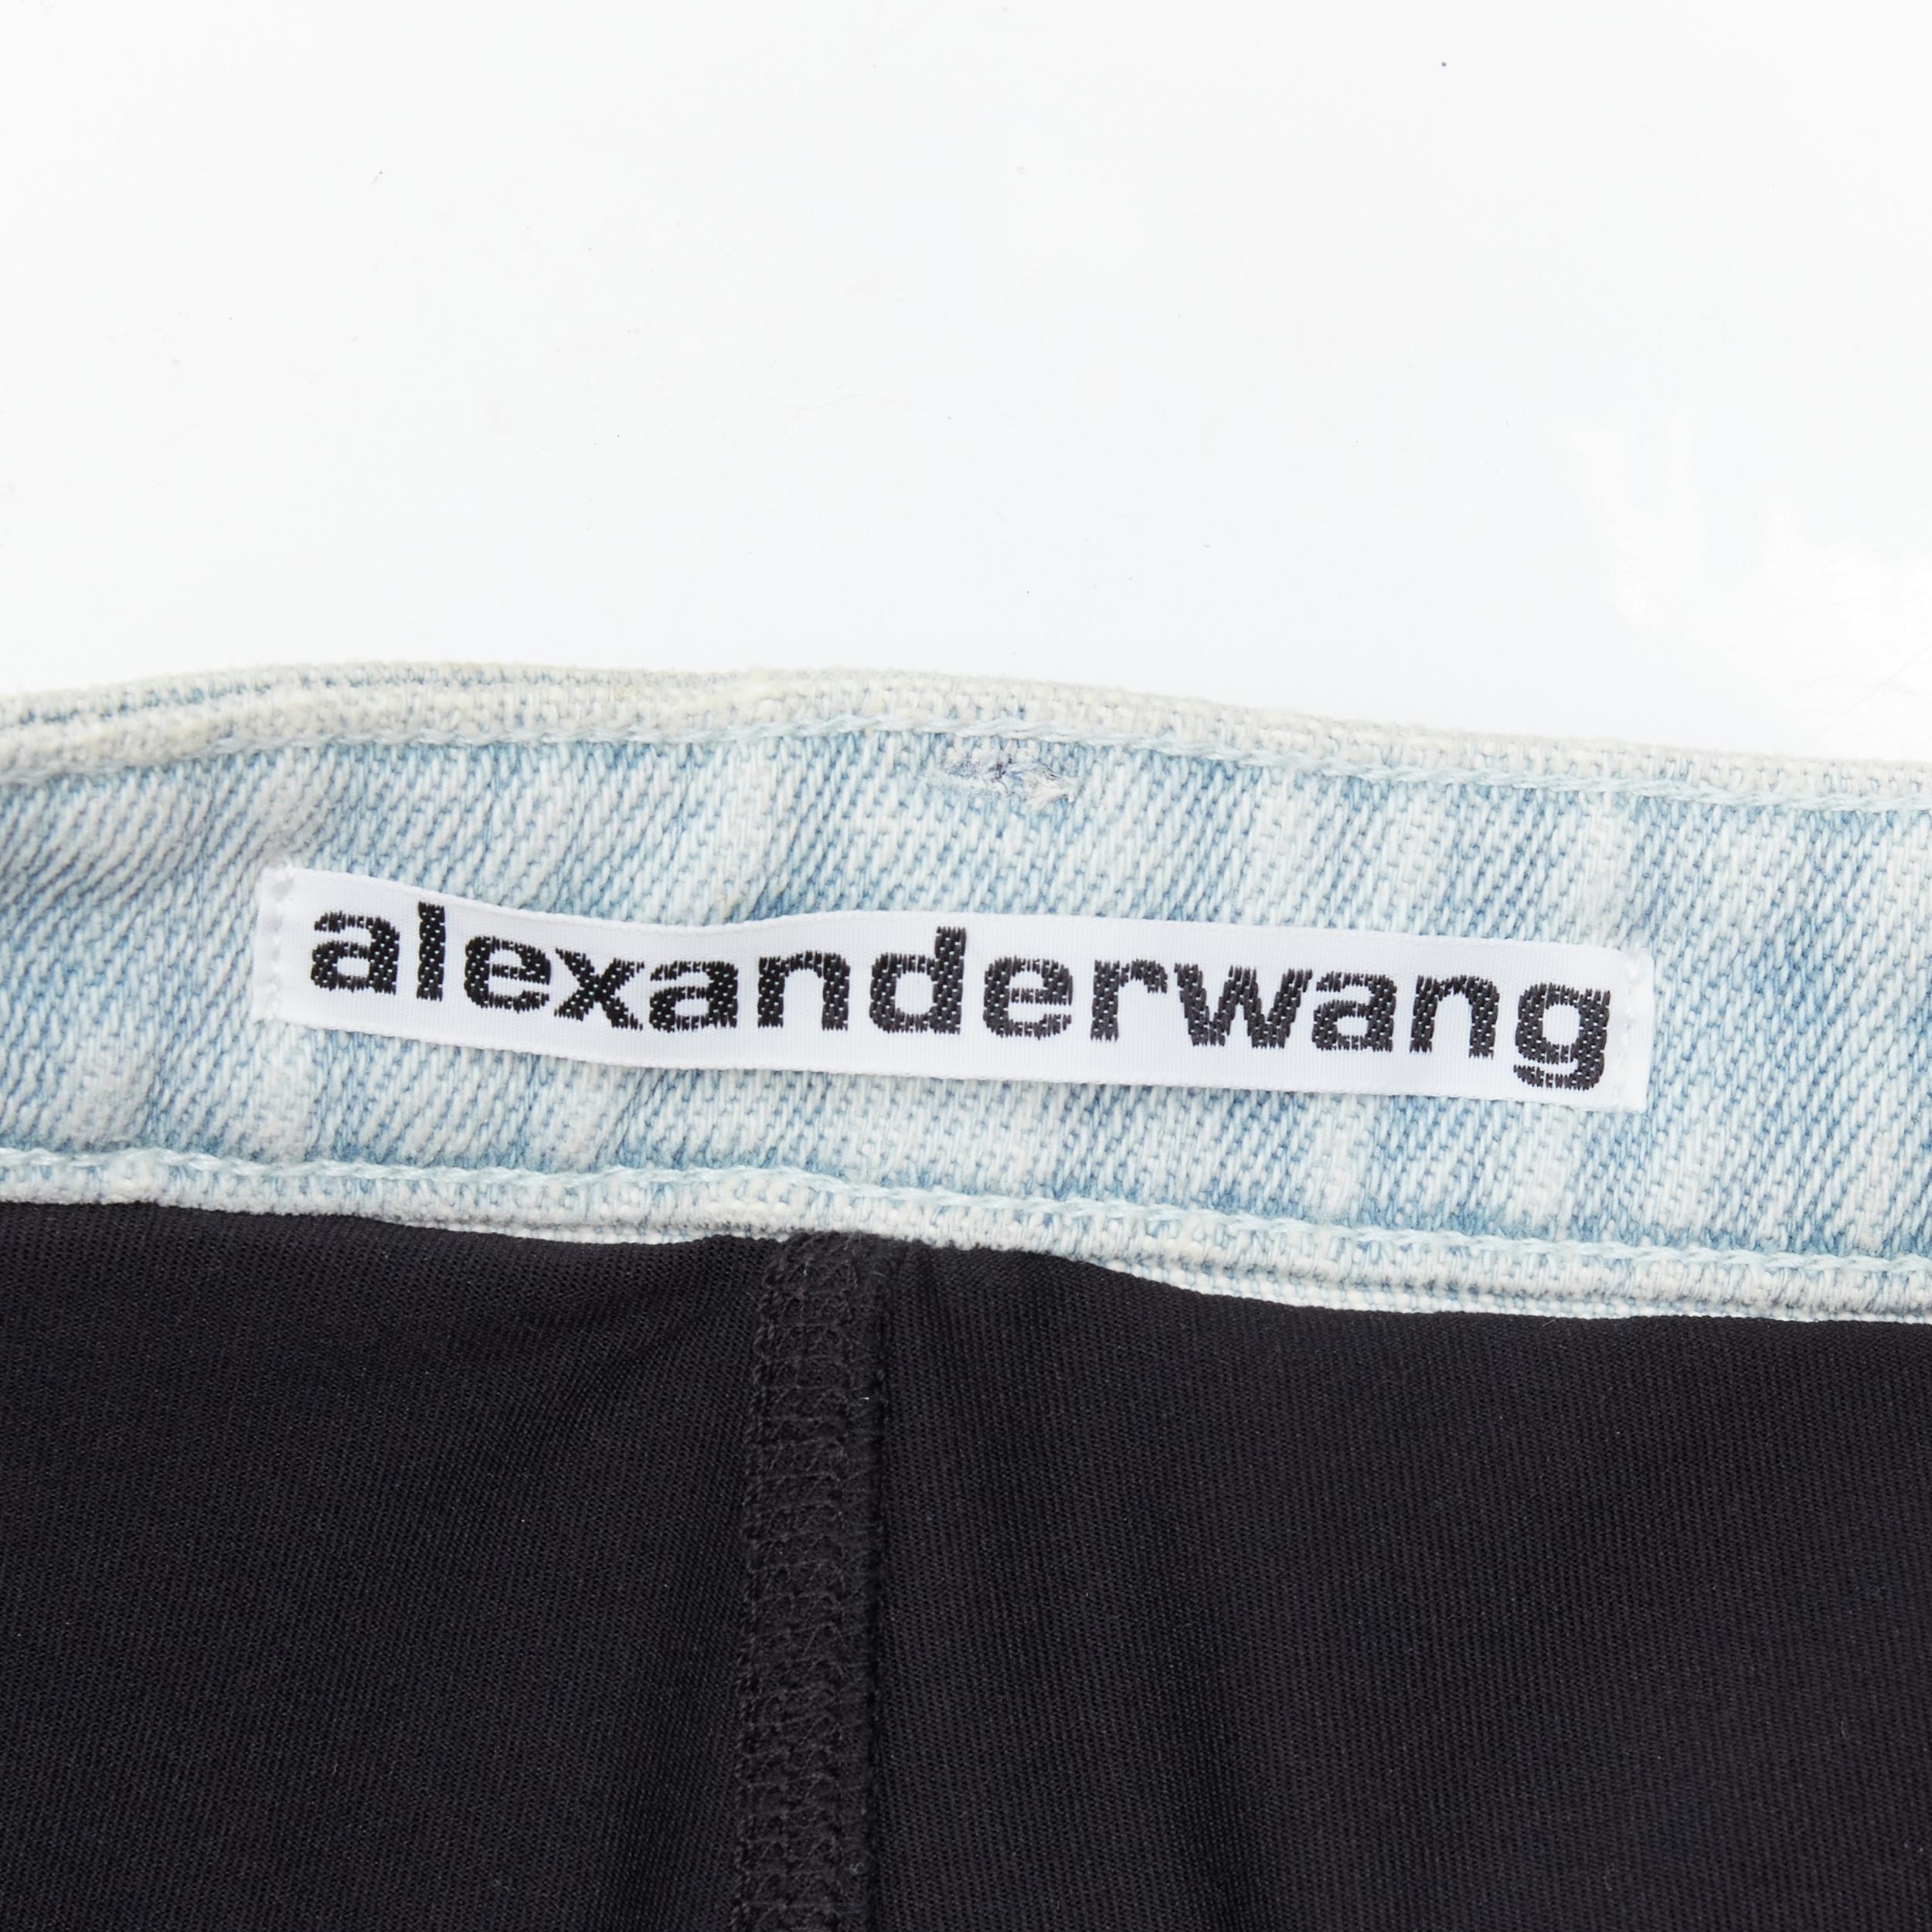 ALEXANDER WANG light distressed denim black boy shorts legging layered shorts XS 1